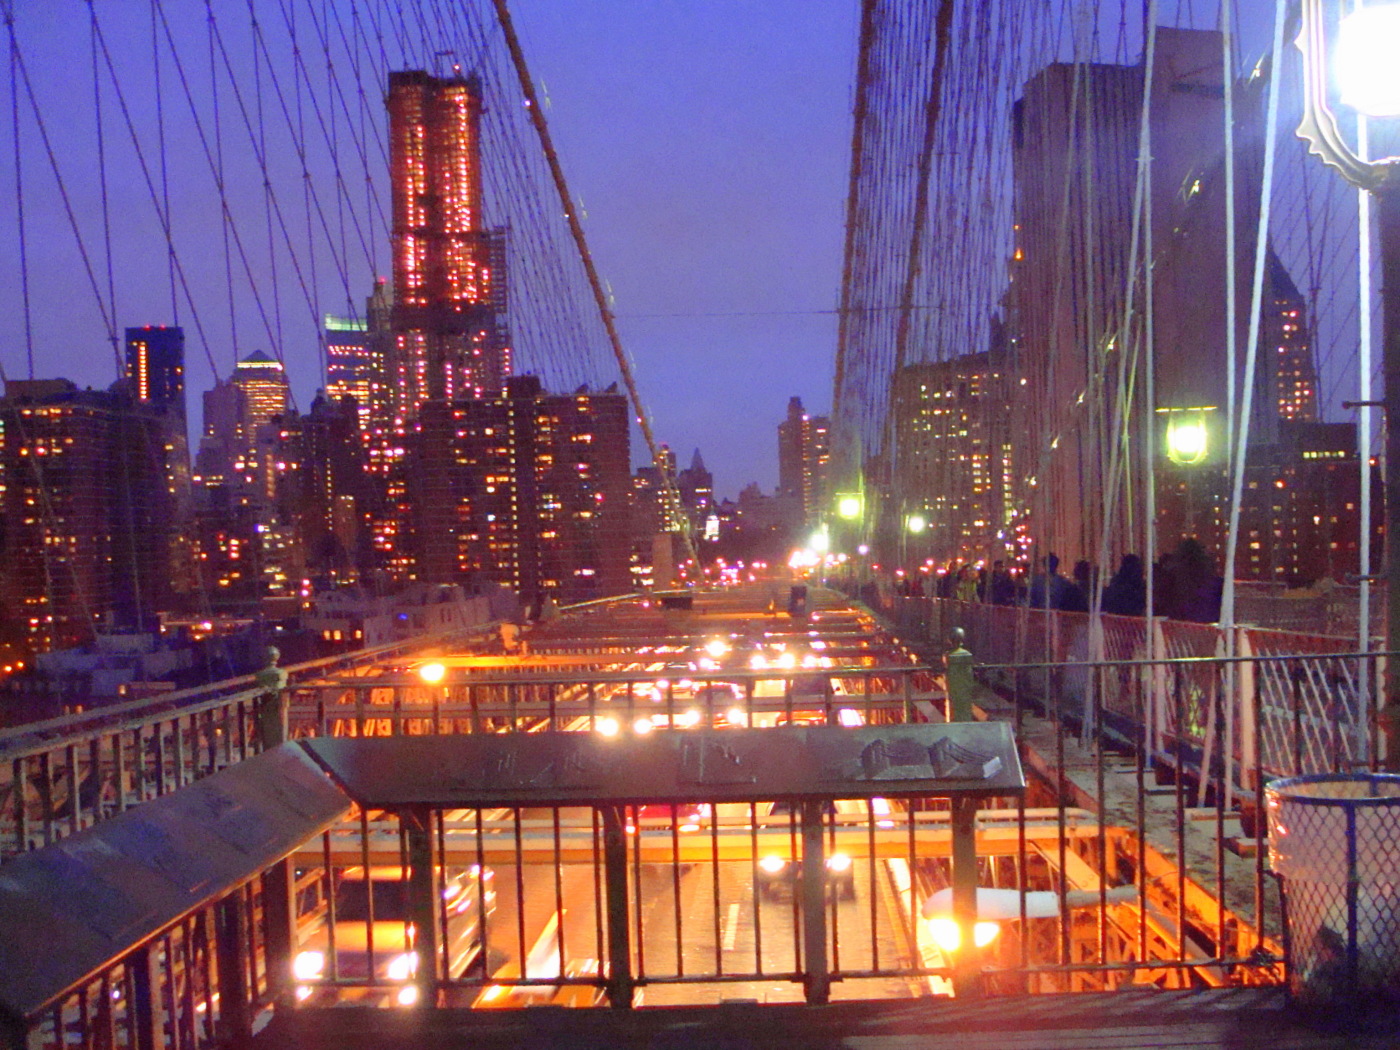 New York City from the Brooklyn Bridge